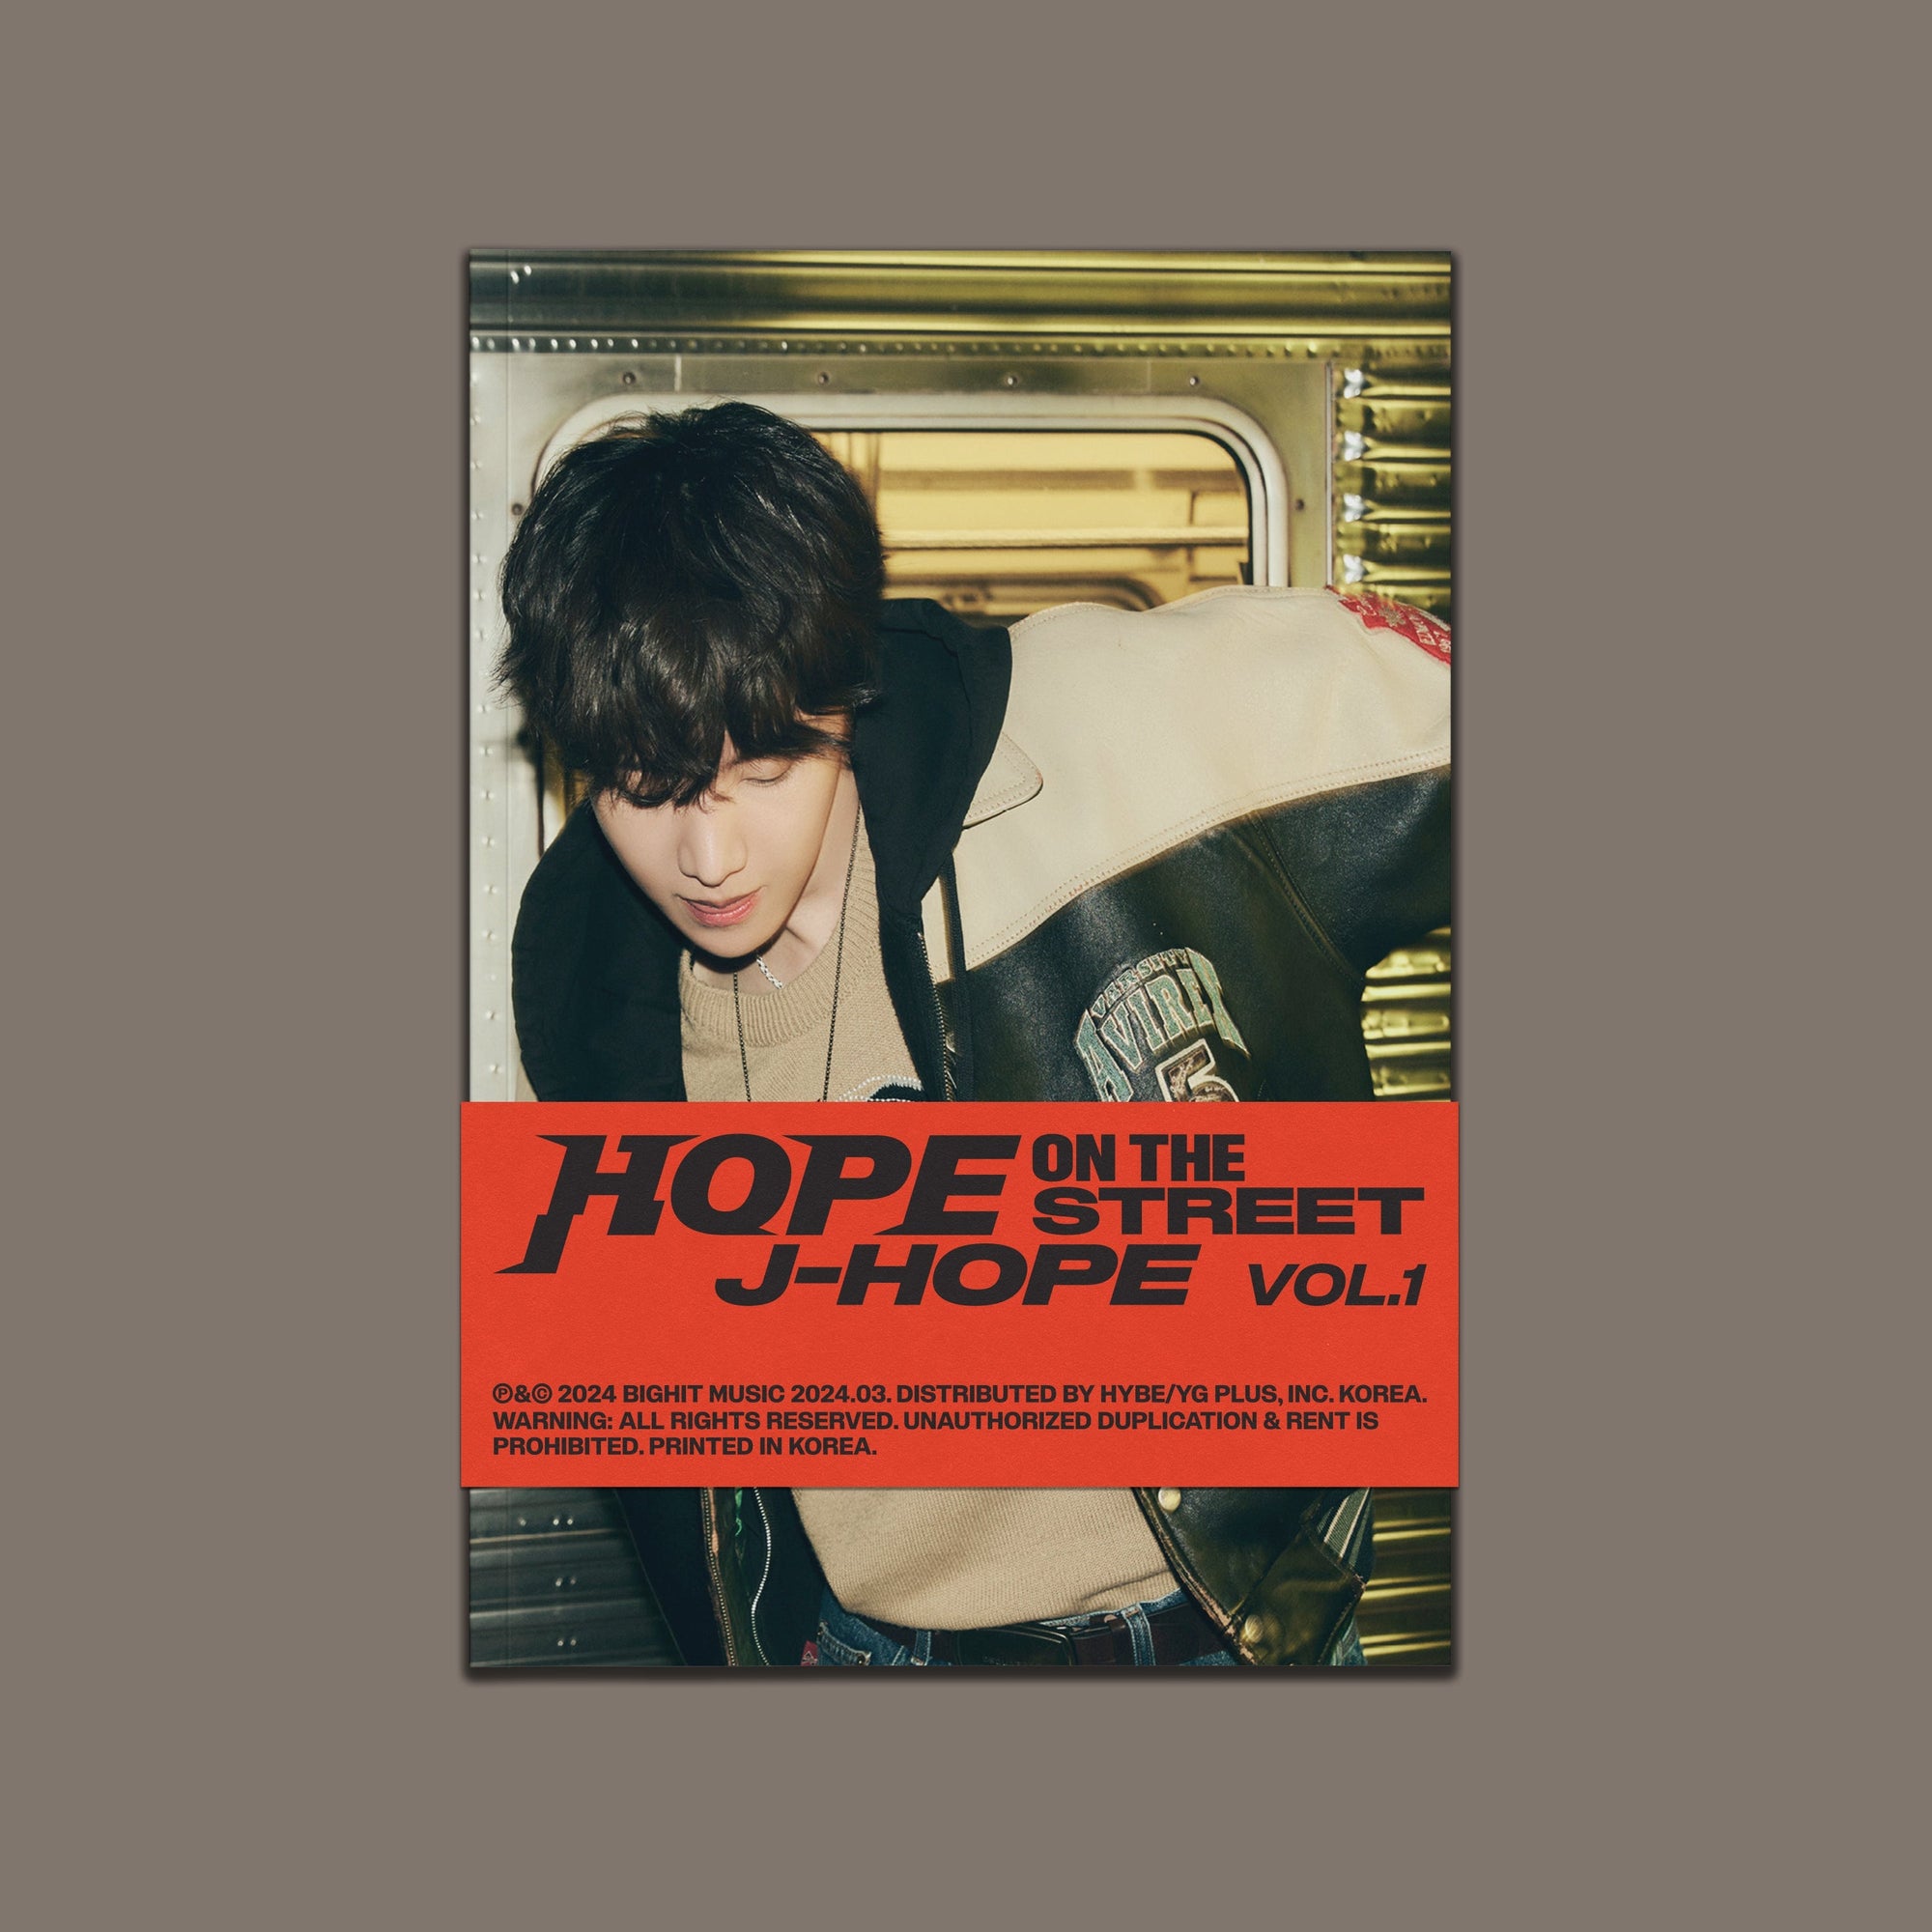 J-HOPE - HOPE ON THE STREET VOL.1 SPECIAL ALBUM